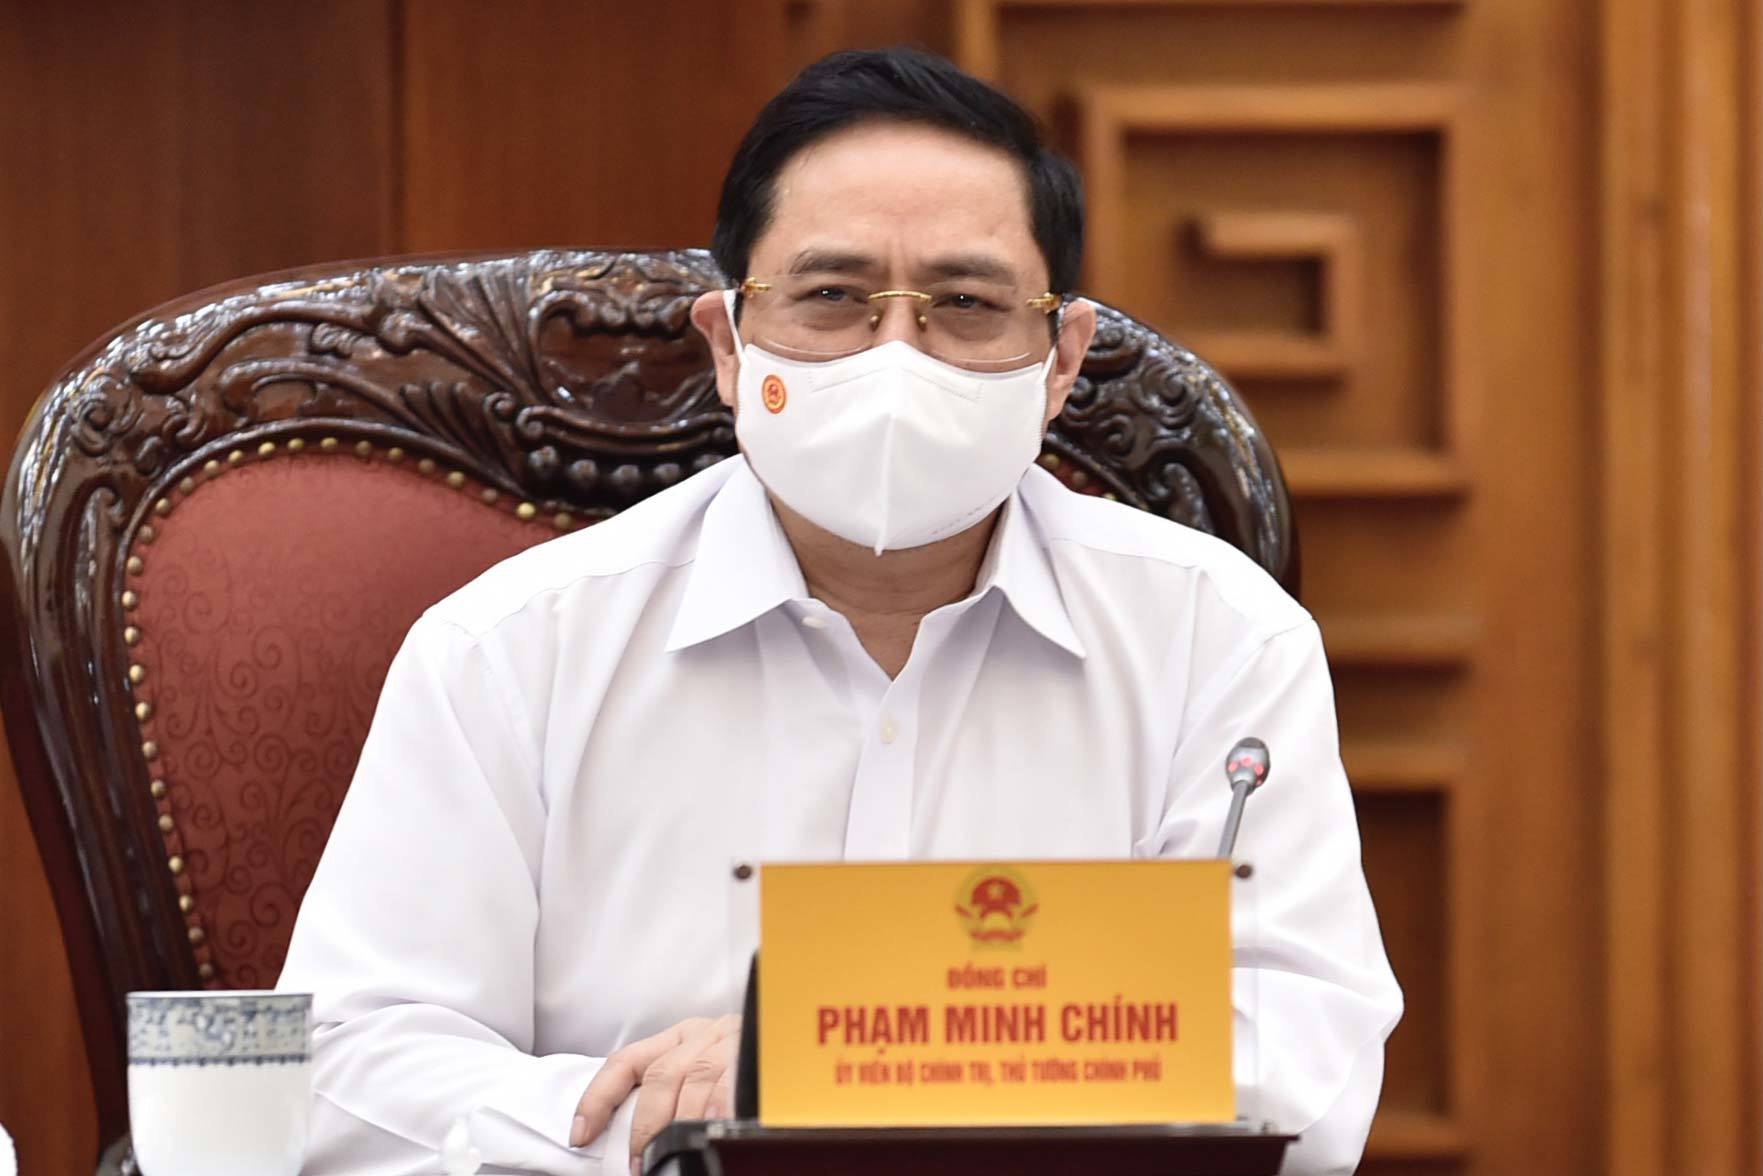 Prime Minister Pham Minh Chinh: Inspection for prevention, deterrence, fair handling before the law, serving development